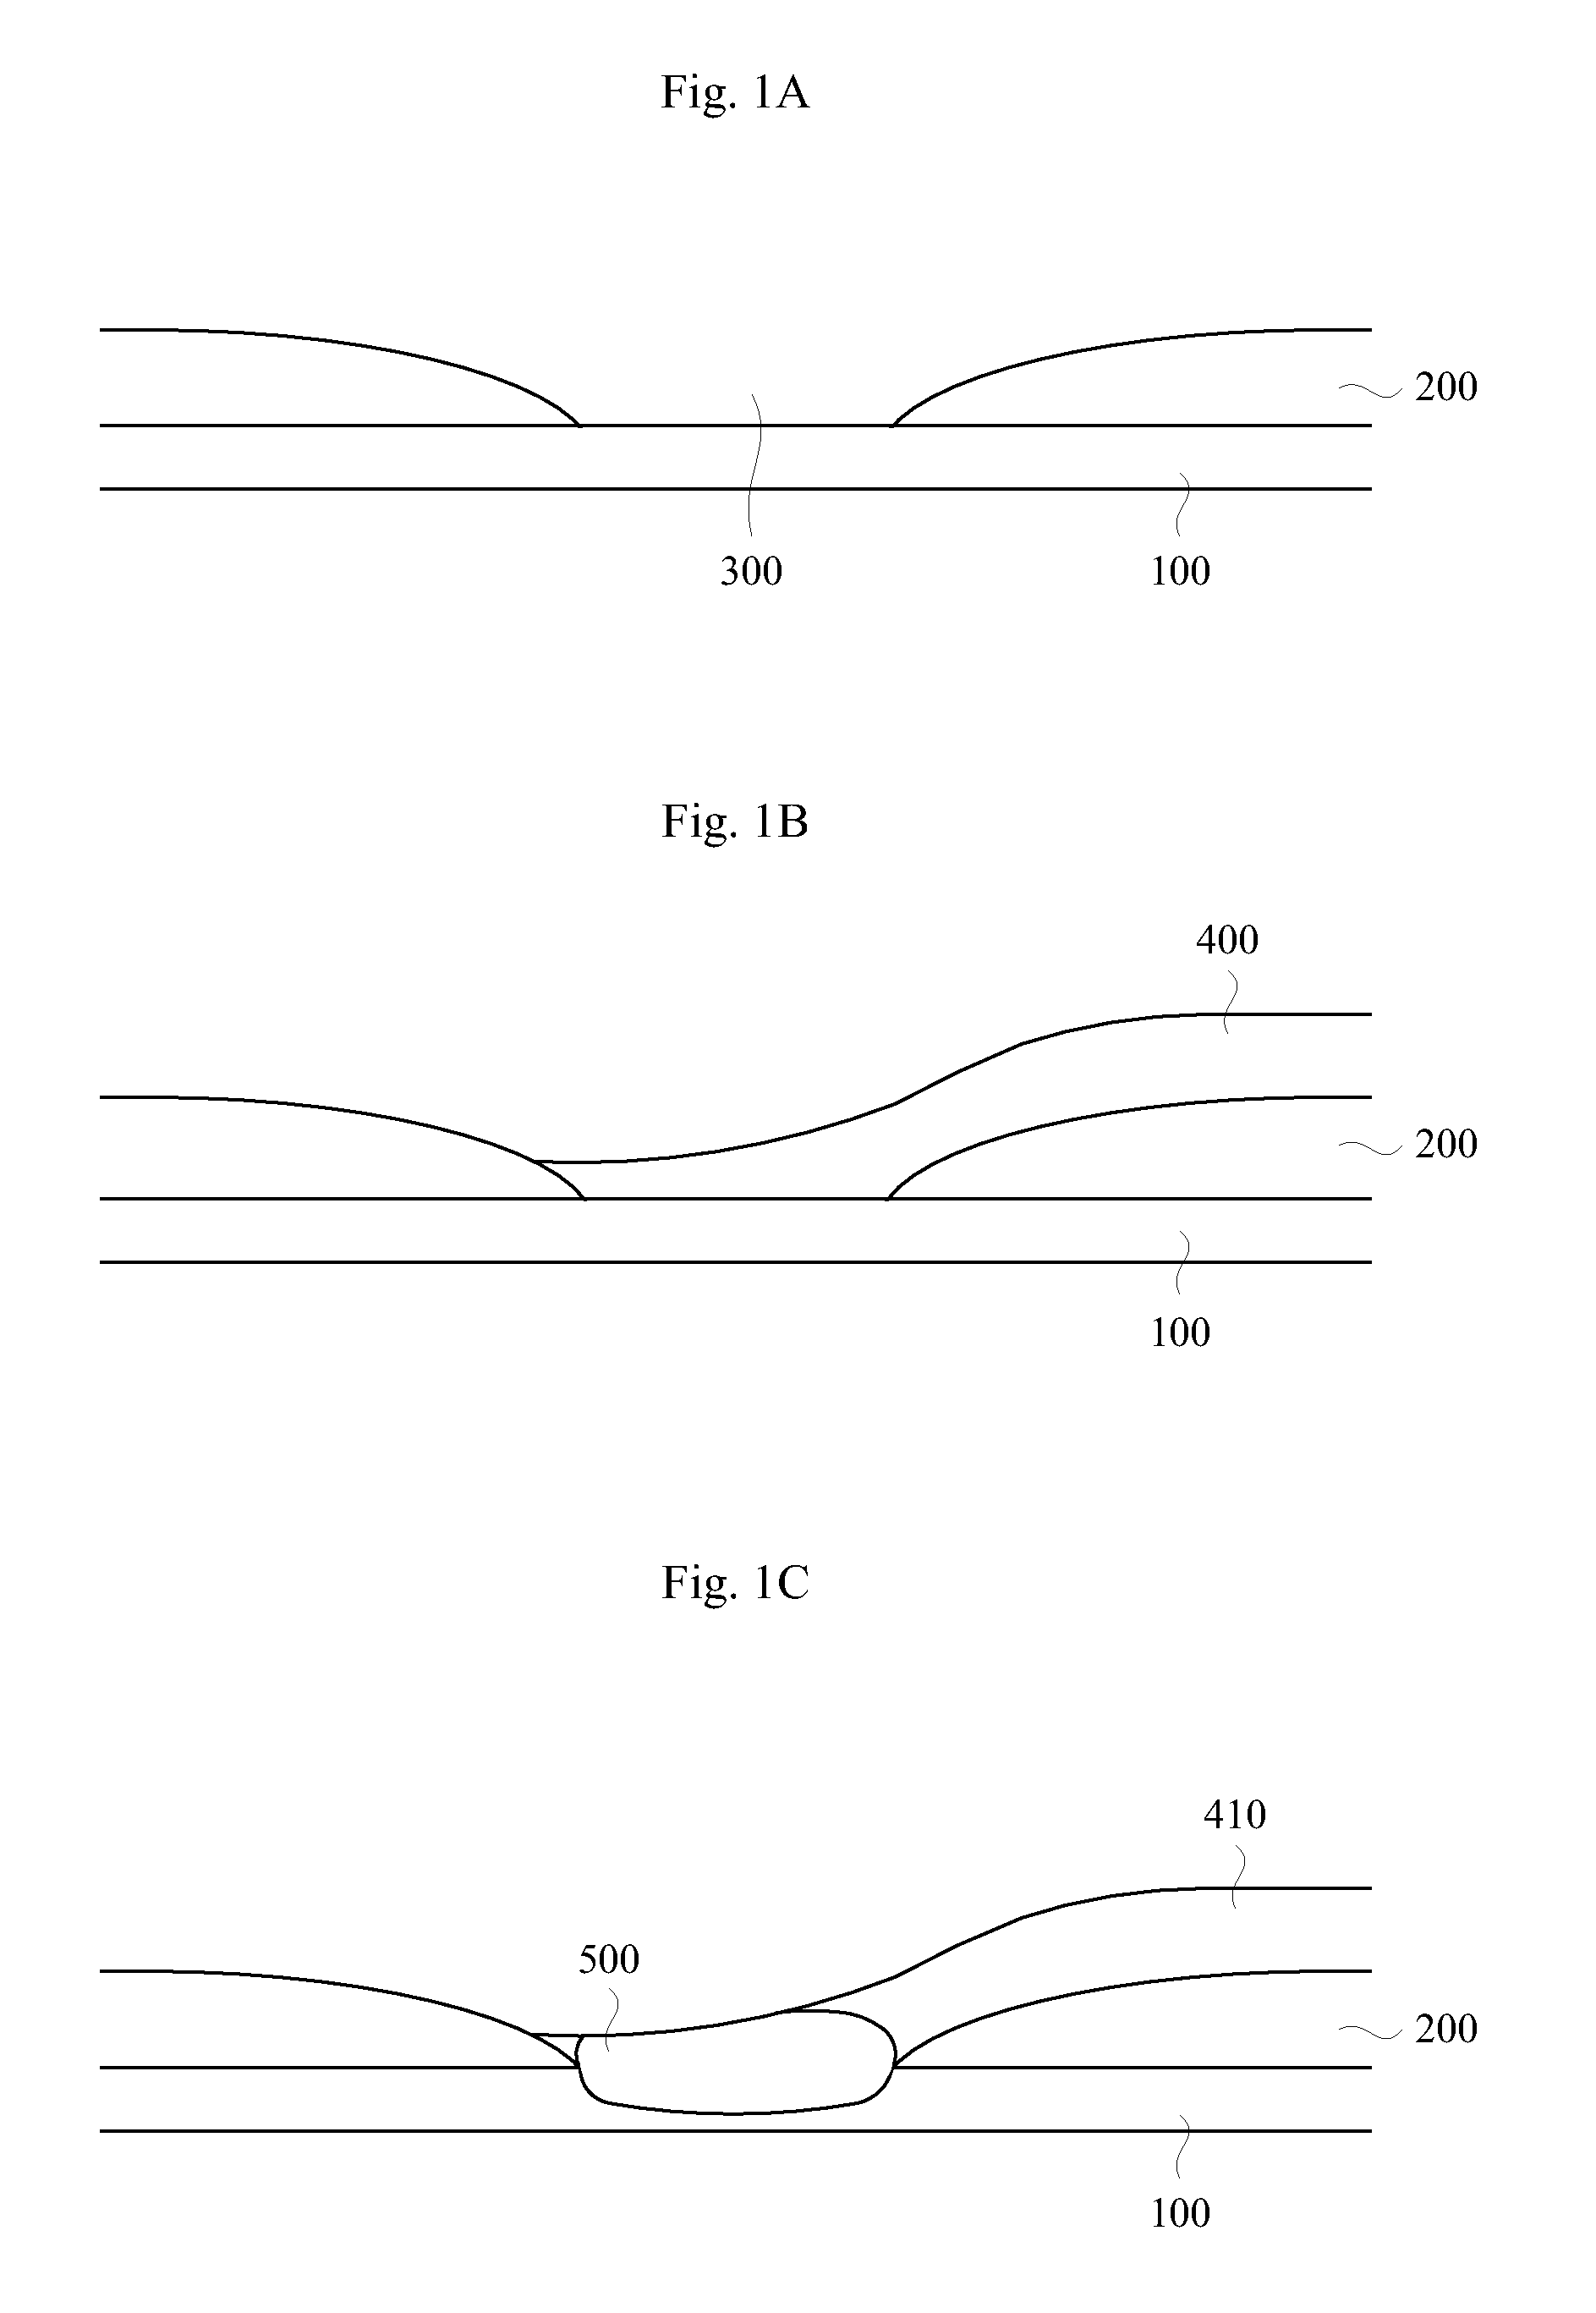 Printing of contact metal and interconnect metal via seed printing and plating